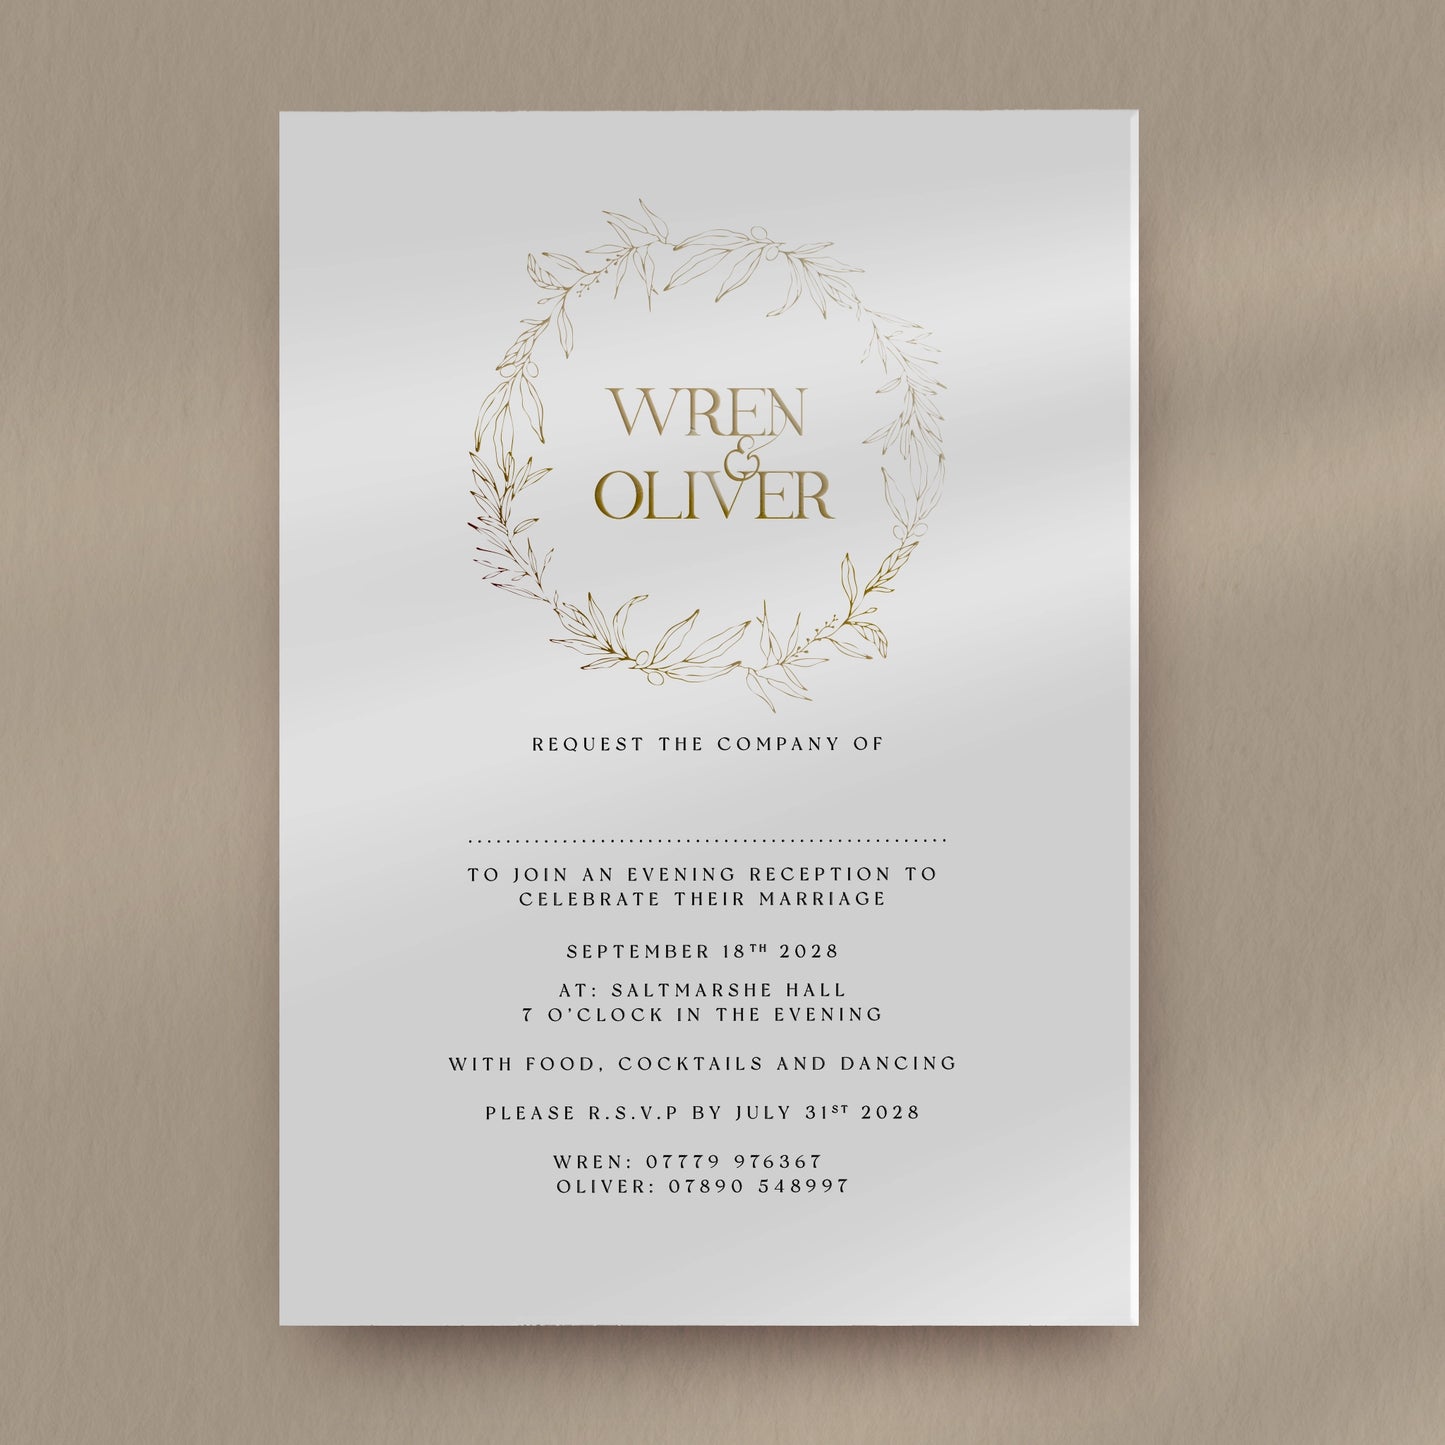 Evening Invitation Sample  Ivy and Gold Wedding Stationery Wren  